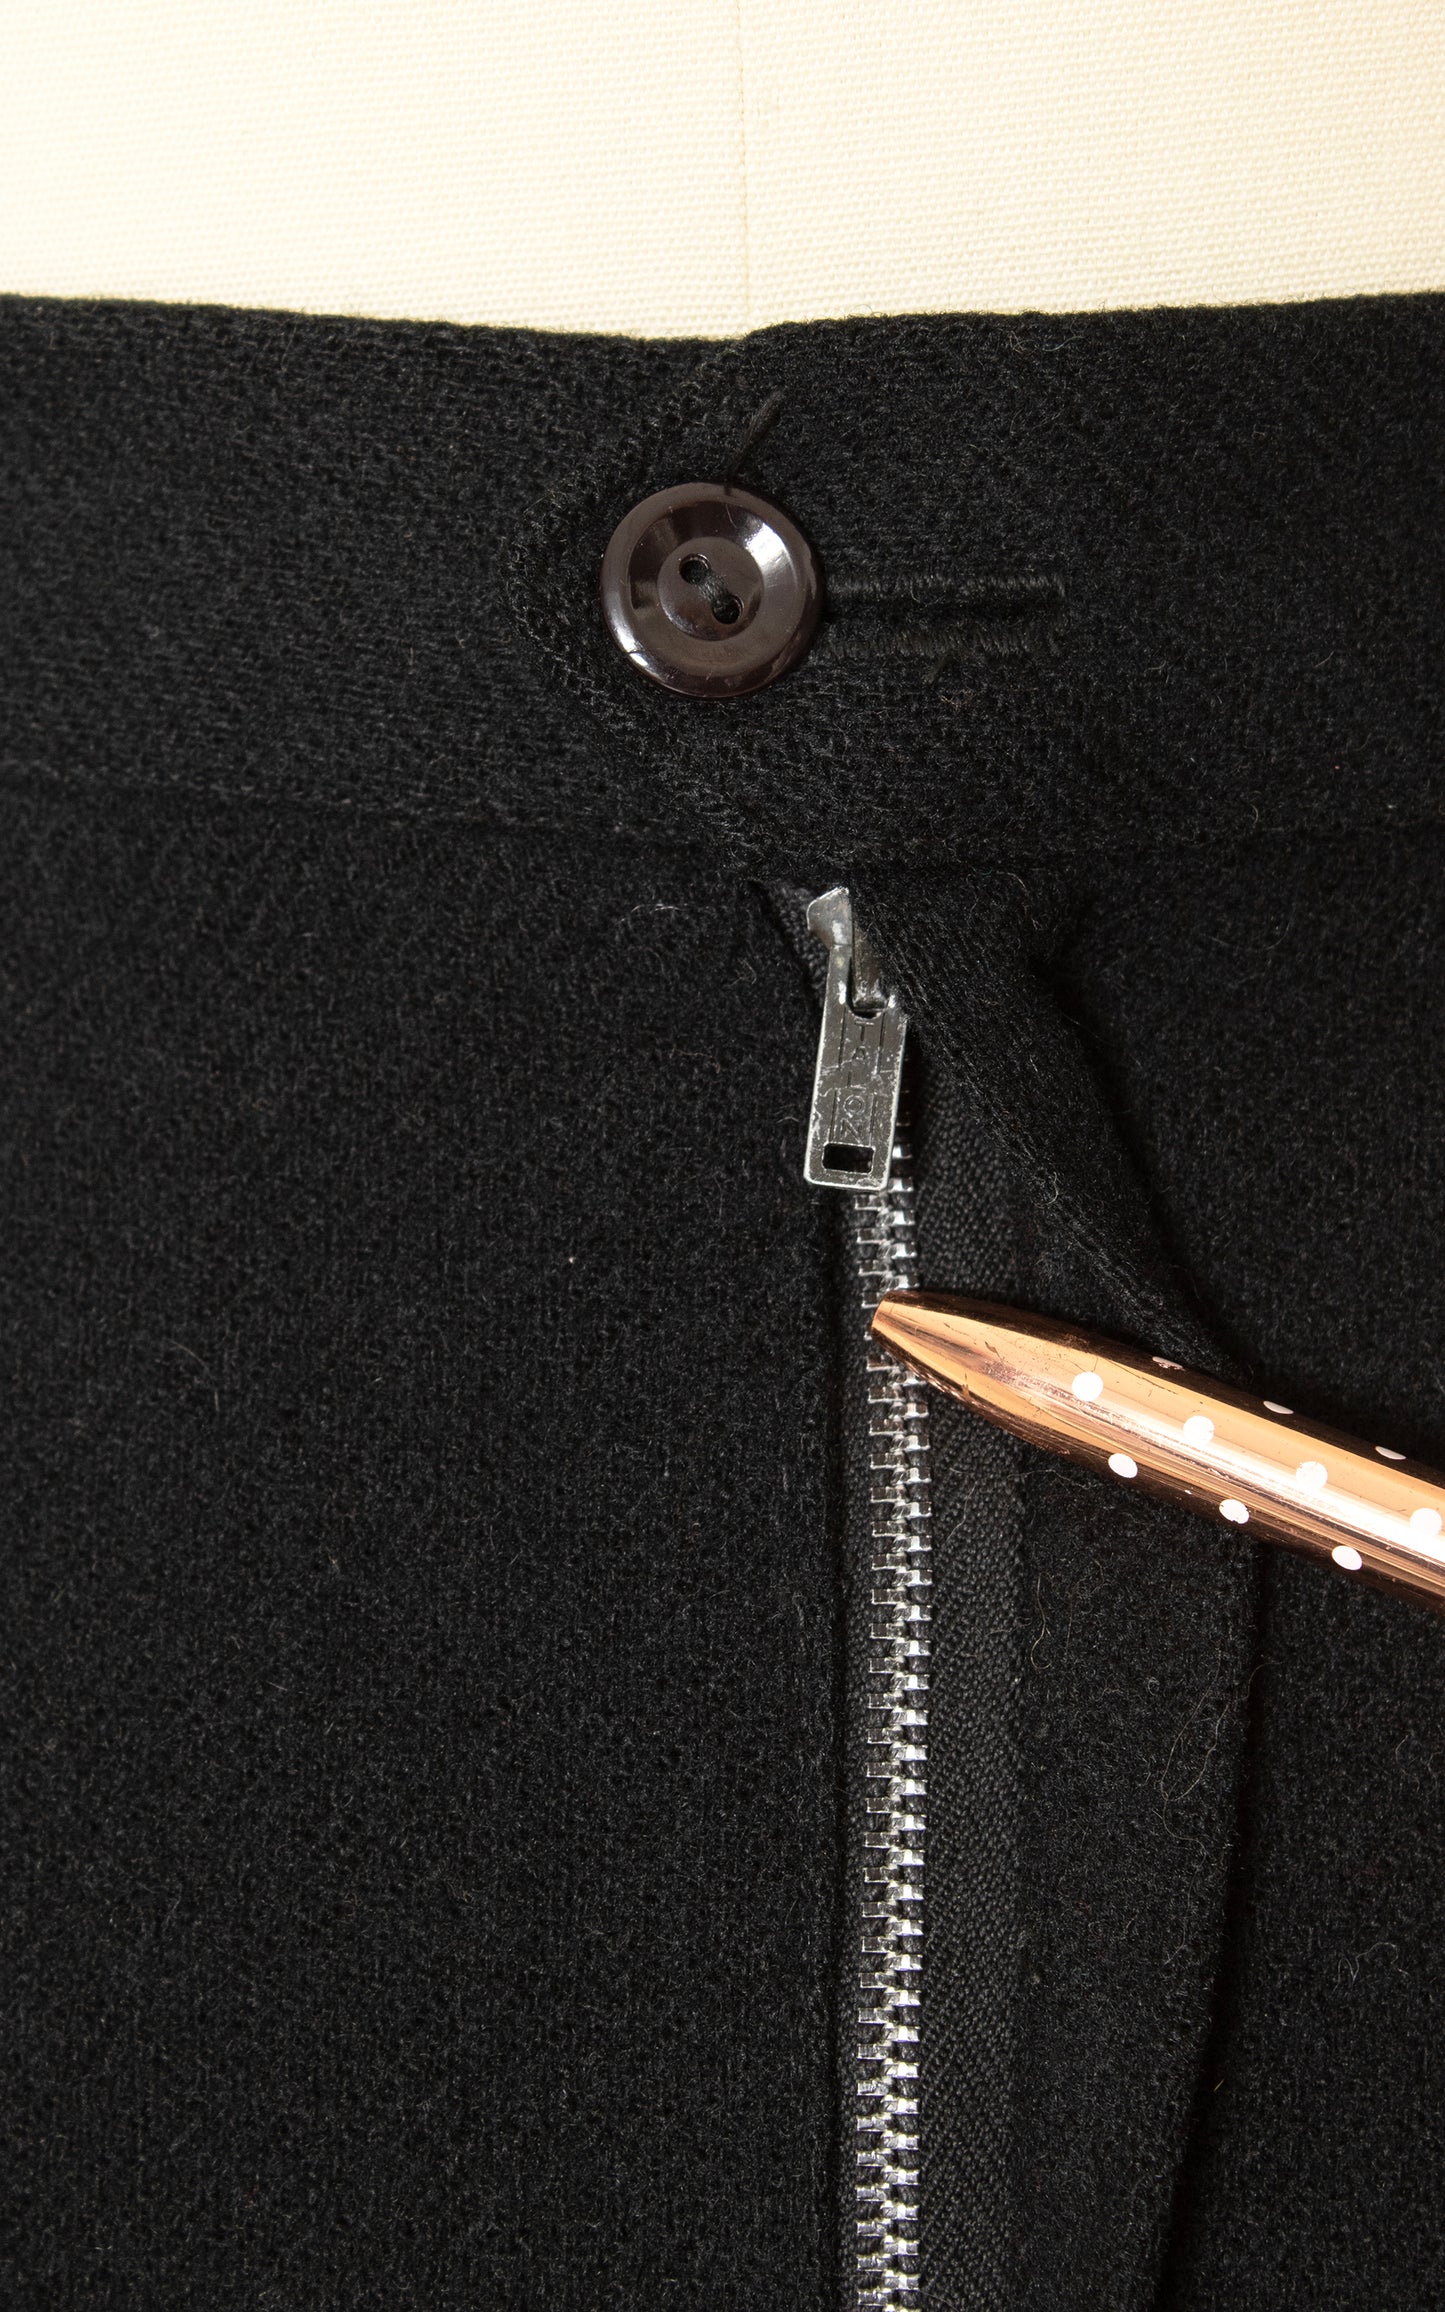 1950s Black Wool Pencil Skirt | small